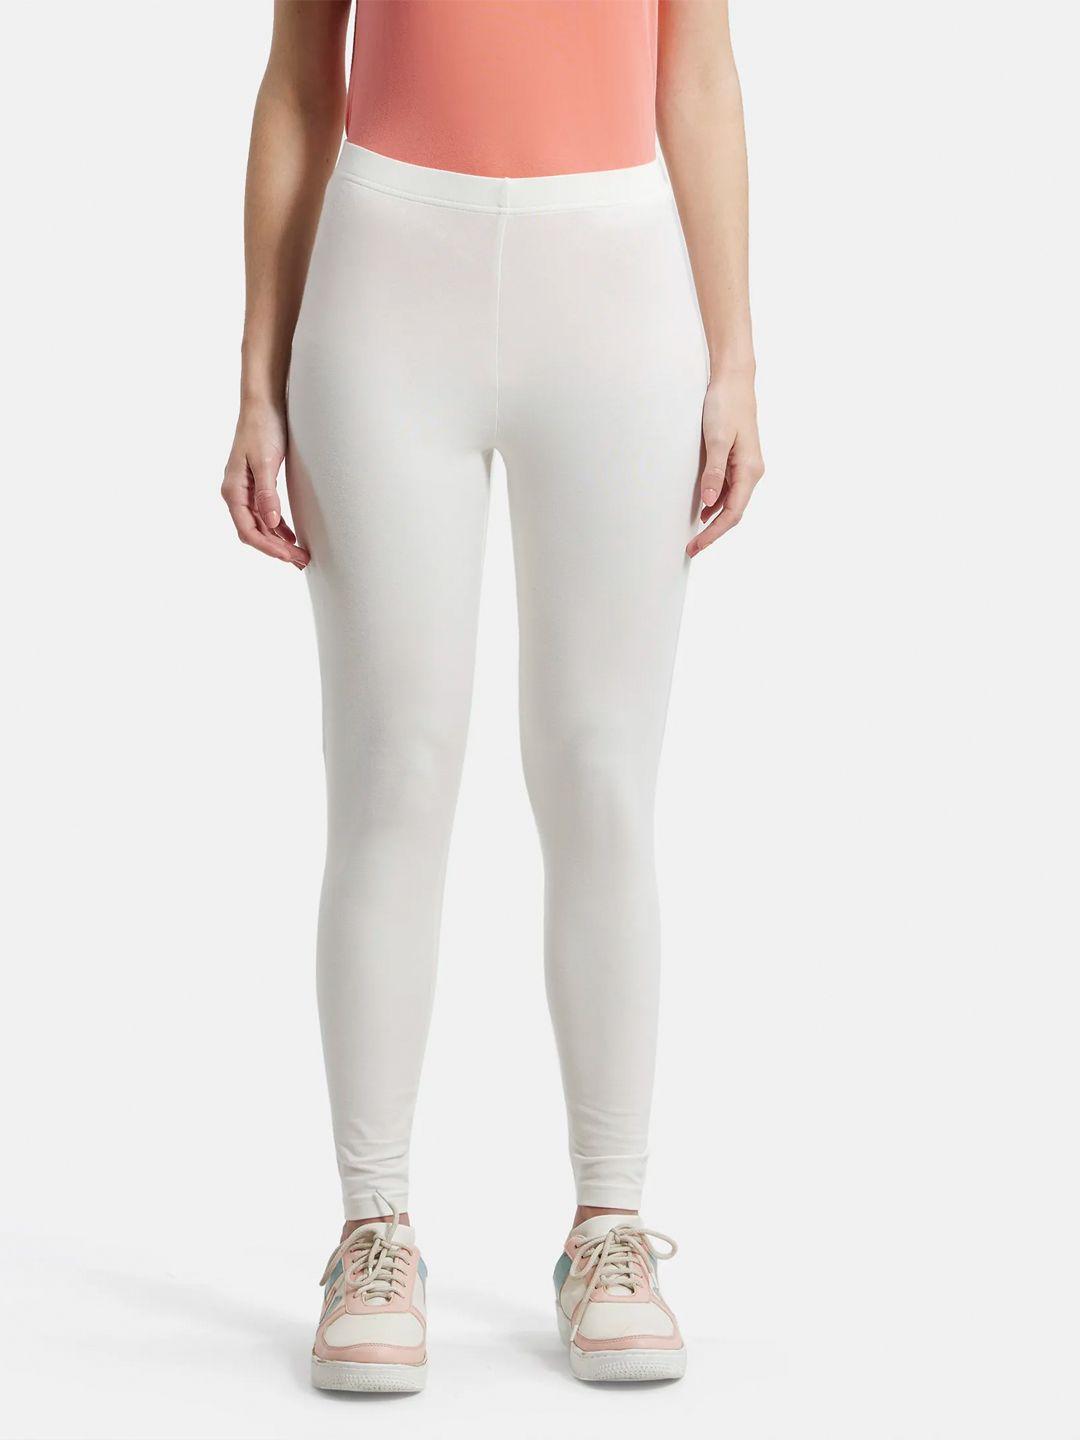 jockey women white solid slim-fit cotton ankle length leggings